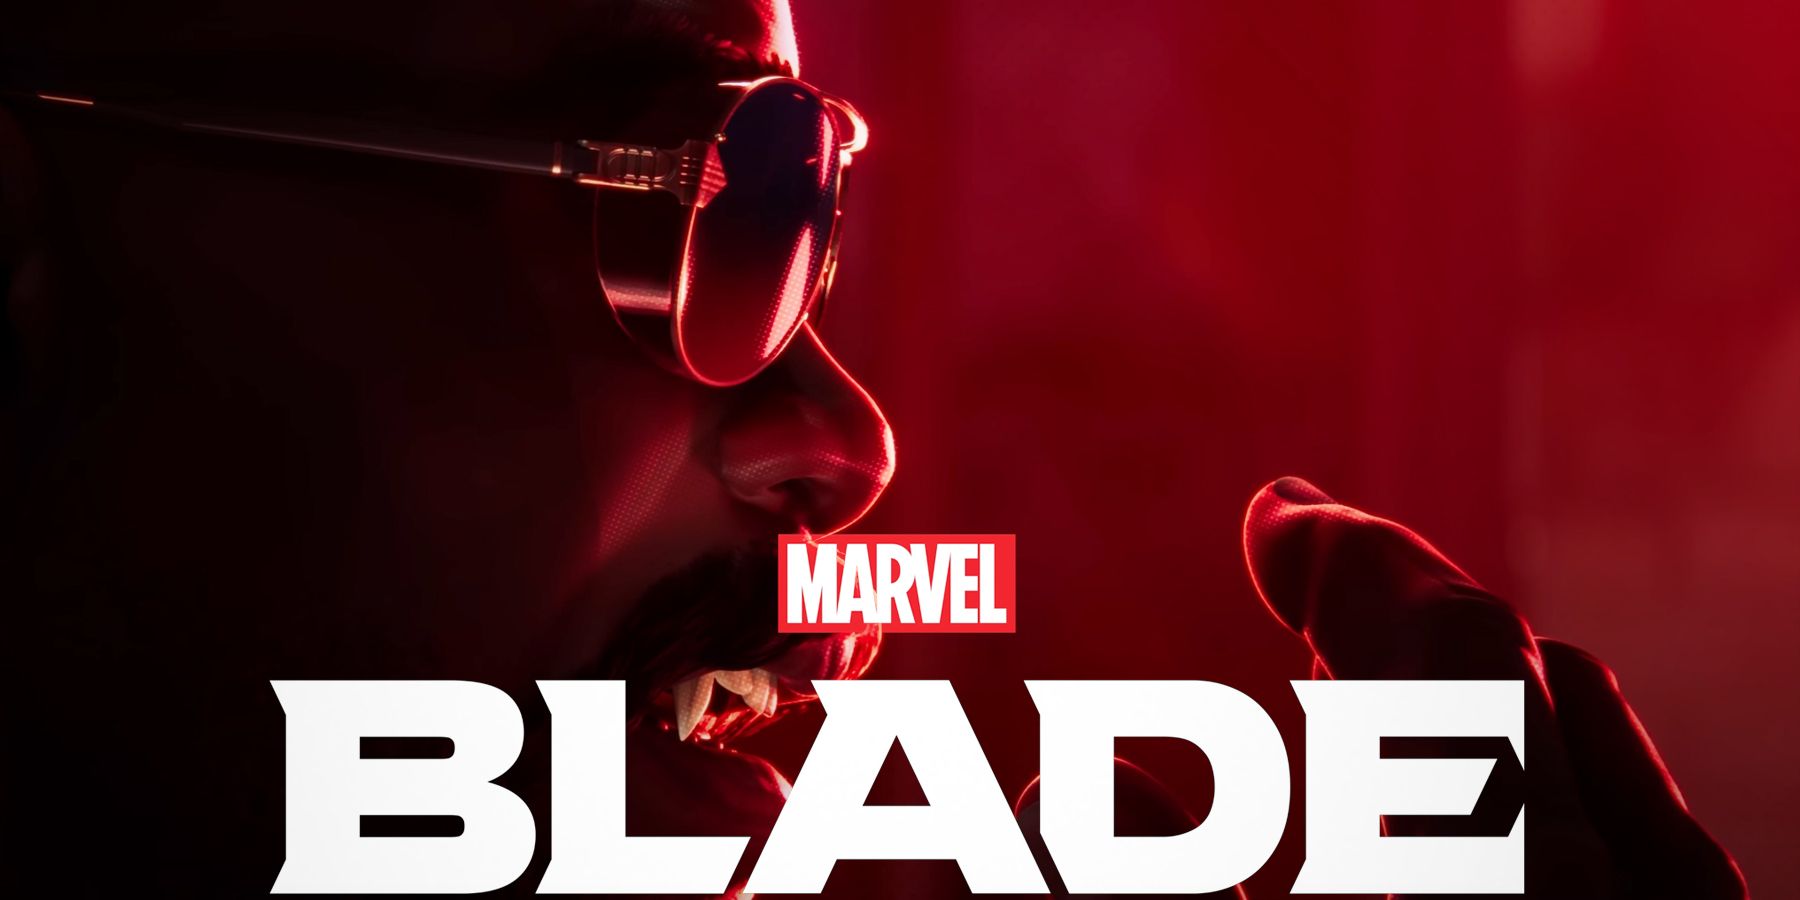 Marvel's Blade teaser sunglasses still with game logo